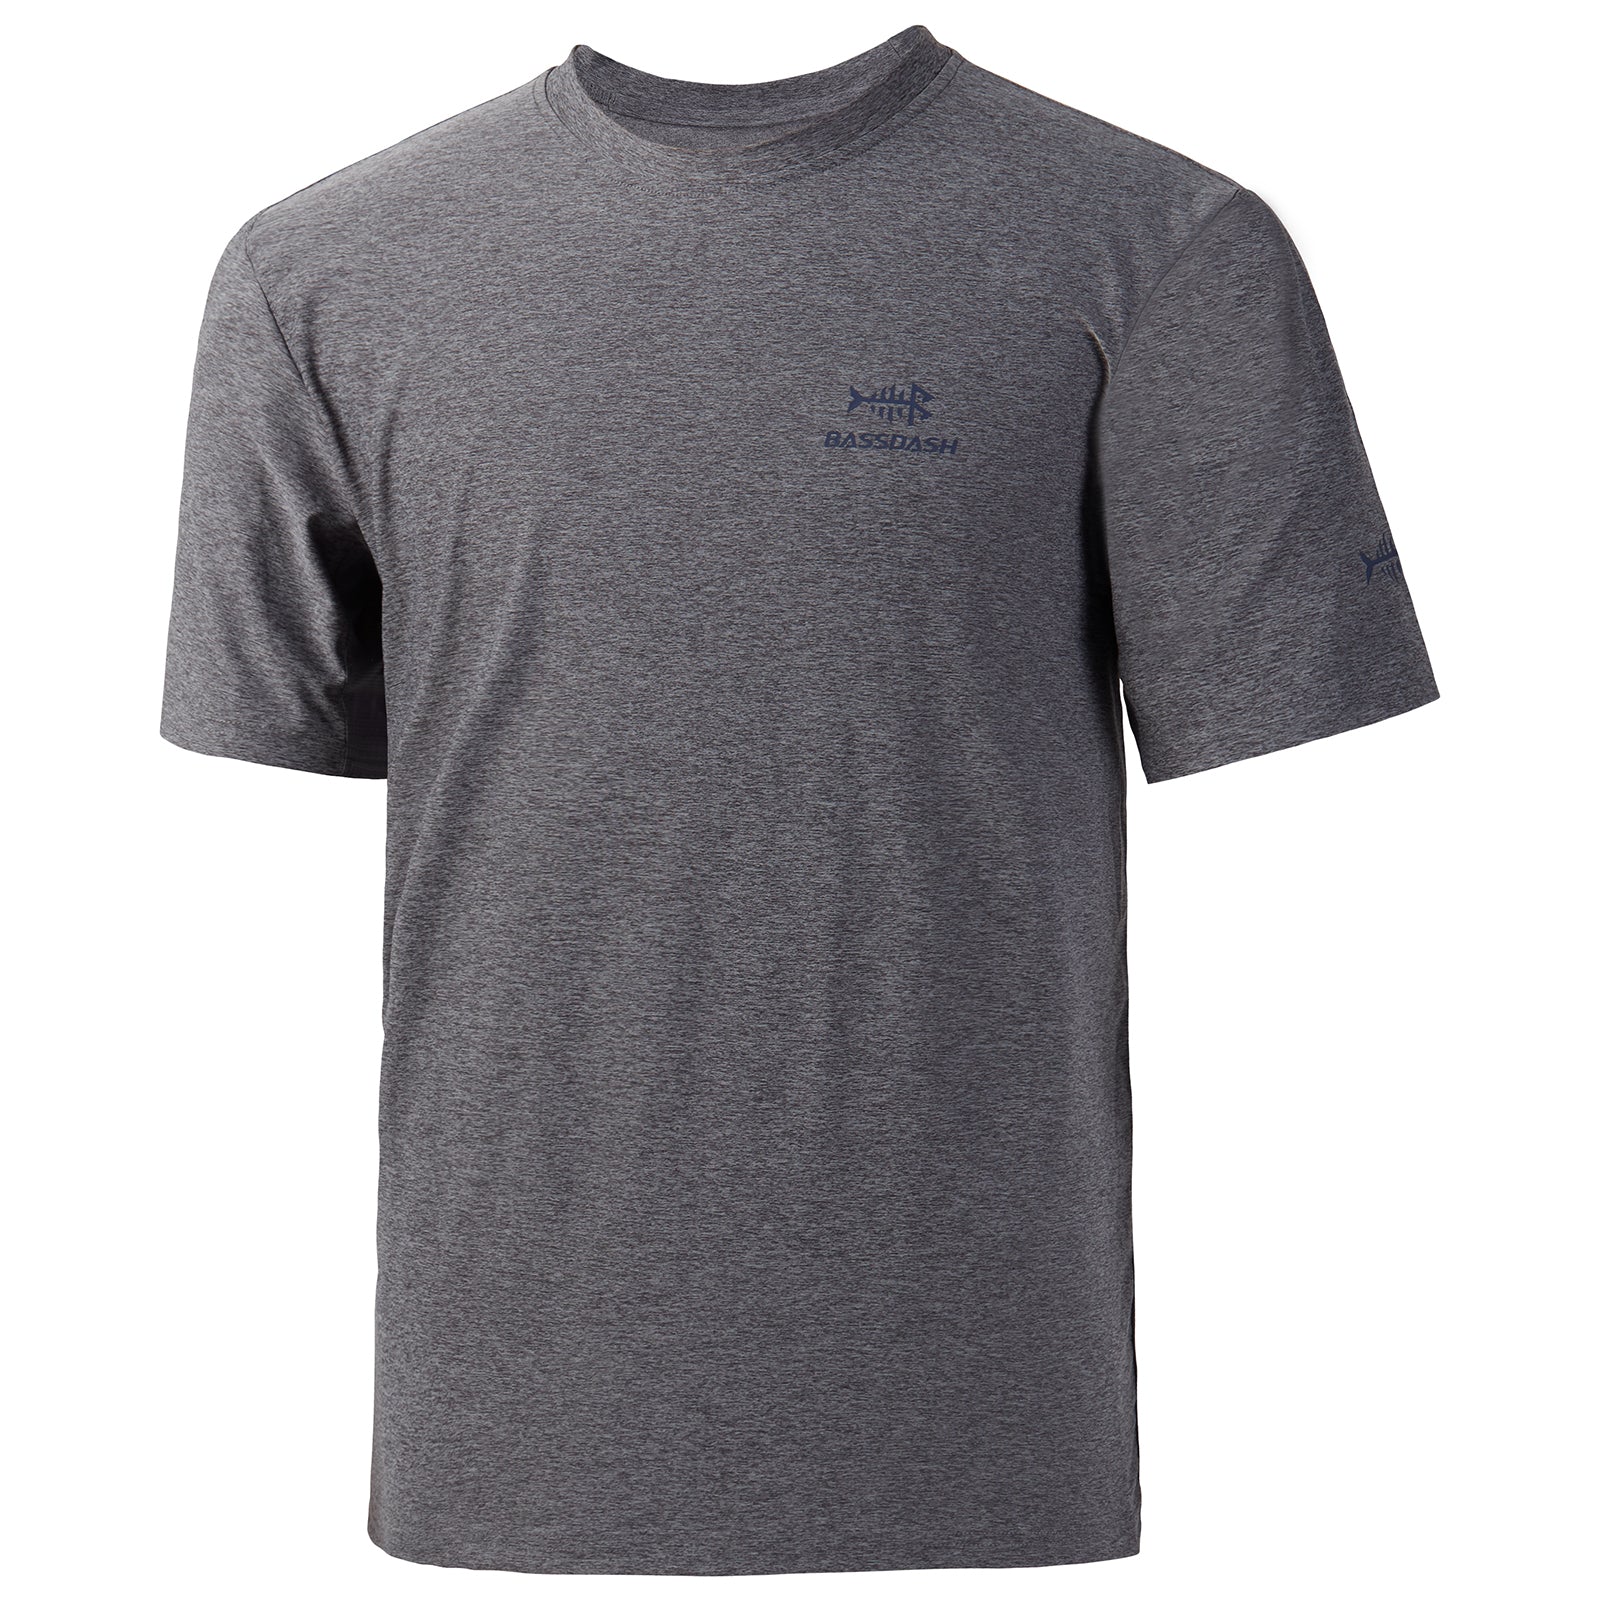 Bassdash Short Performance Dry Active Quick T-Shirt Sleeve Fishing 50+ Men\'s Shirt UPF